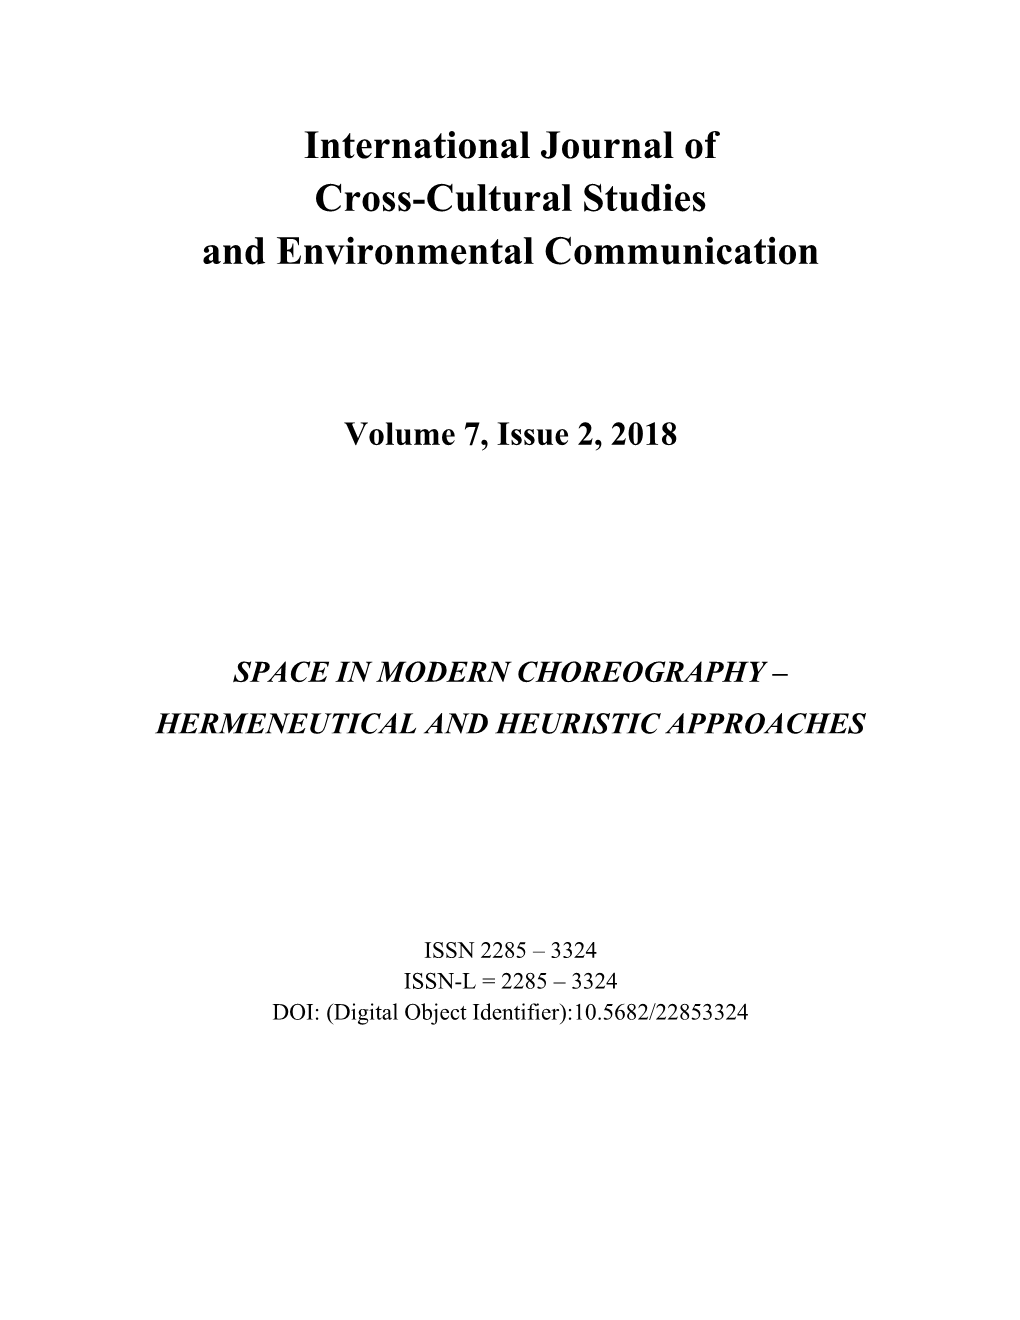 International Journal of Cross-Cultural Studies and Environmental Communication